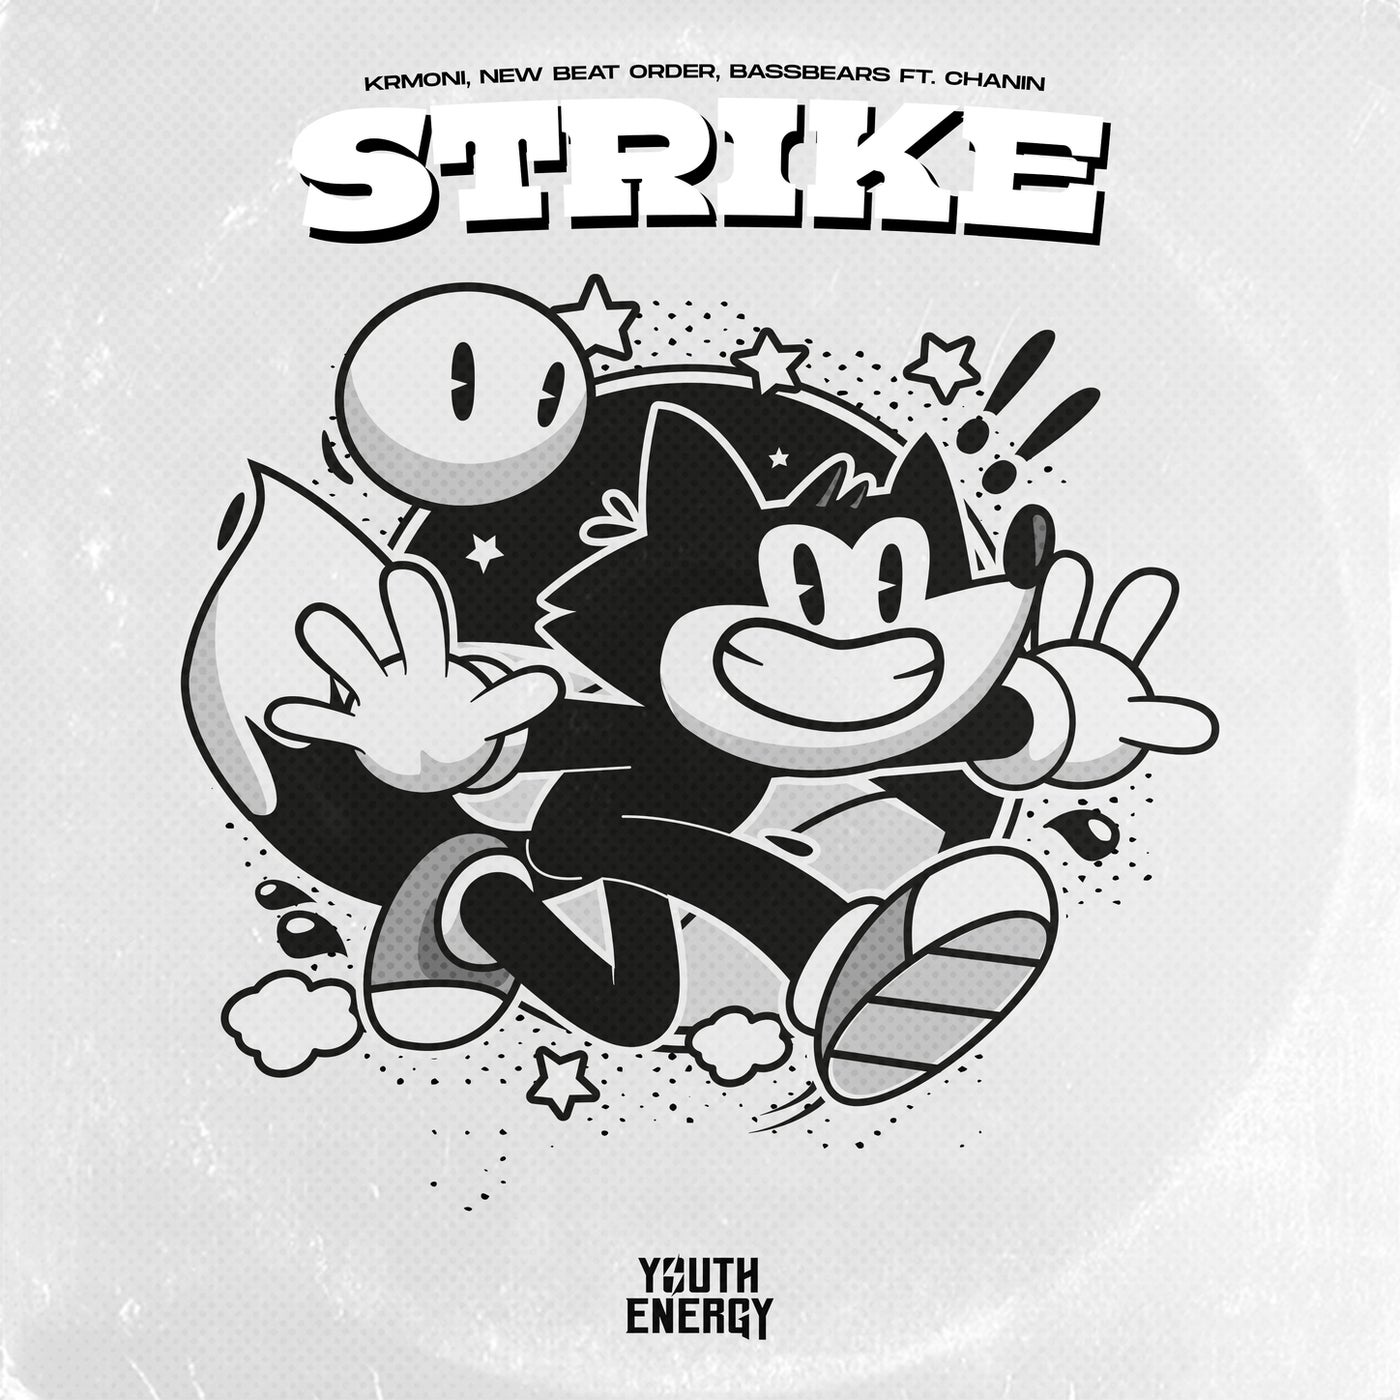 Strike